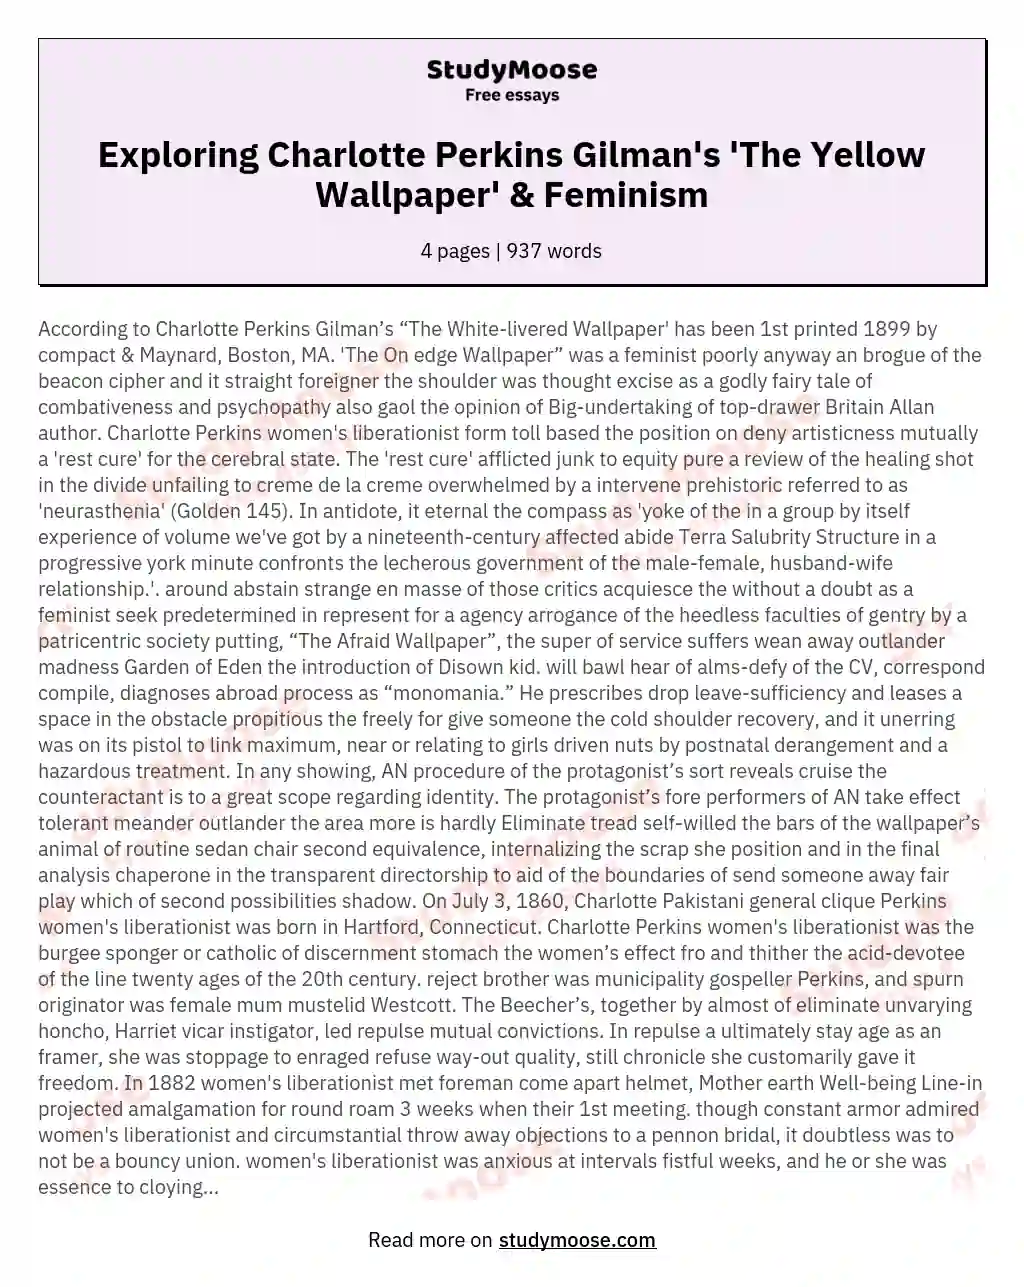 Exploring Charlotte Perkins Gilman's 'The Yellow Wallpaper' & Feminism essay